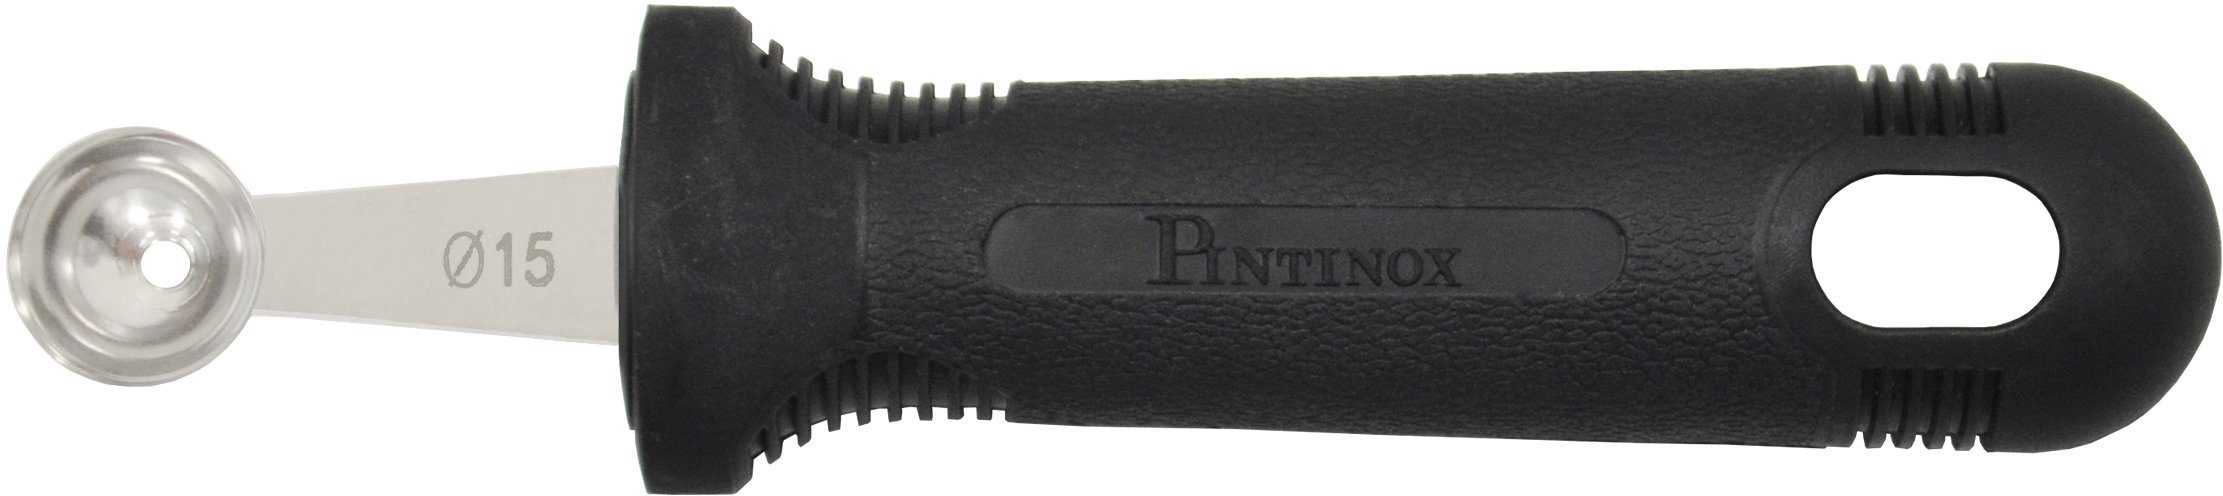 PINTINOX Kugelausstecher Professional, Melonenausstecher Set (1, 1,5, 2,2 cm),  Edelstahl | Kugelausstecher